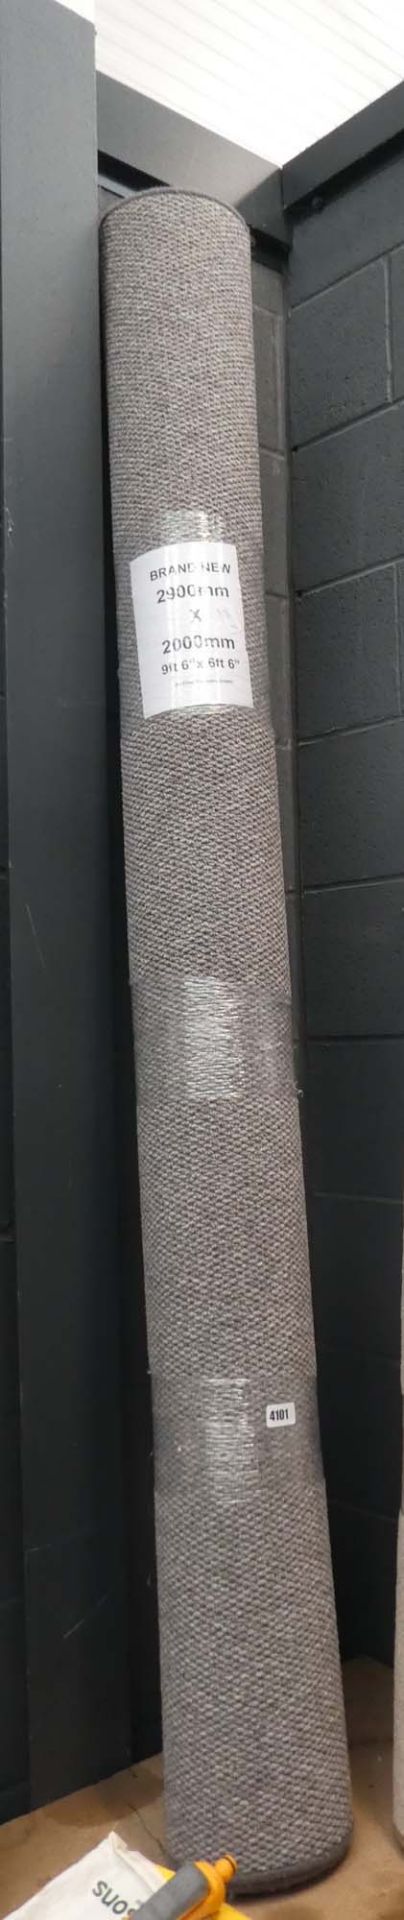 4105 Large grey carpet mat, 2900mm x 2000mm